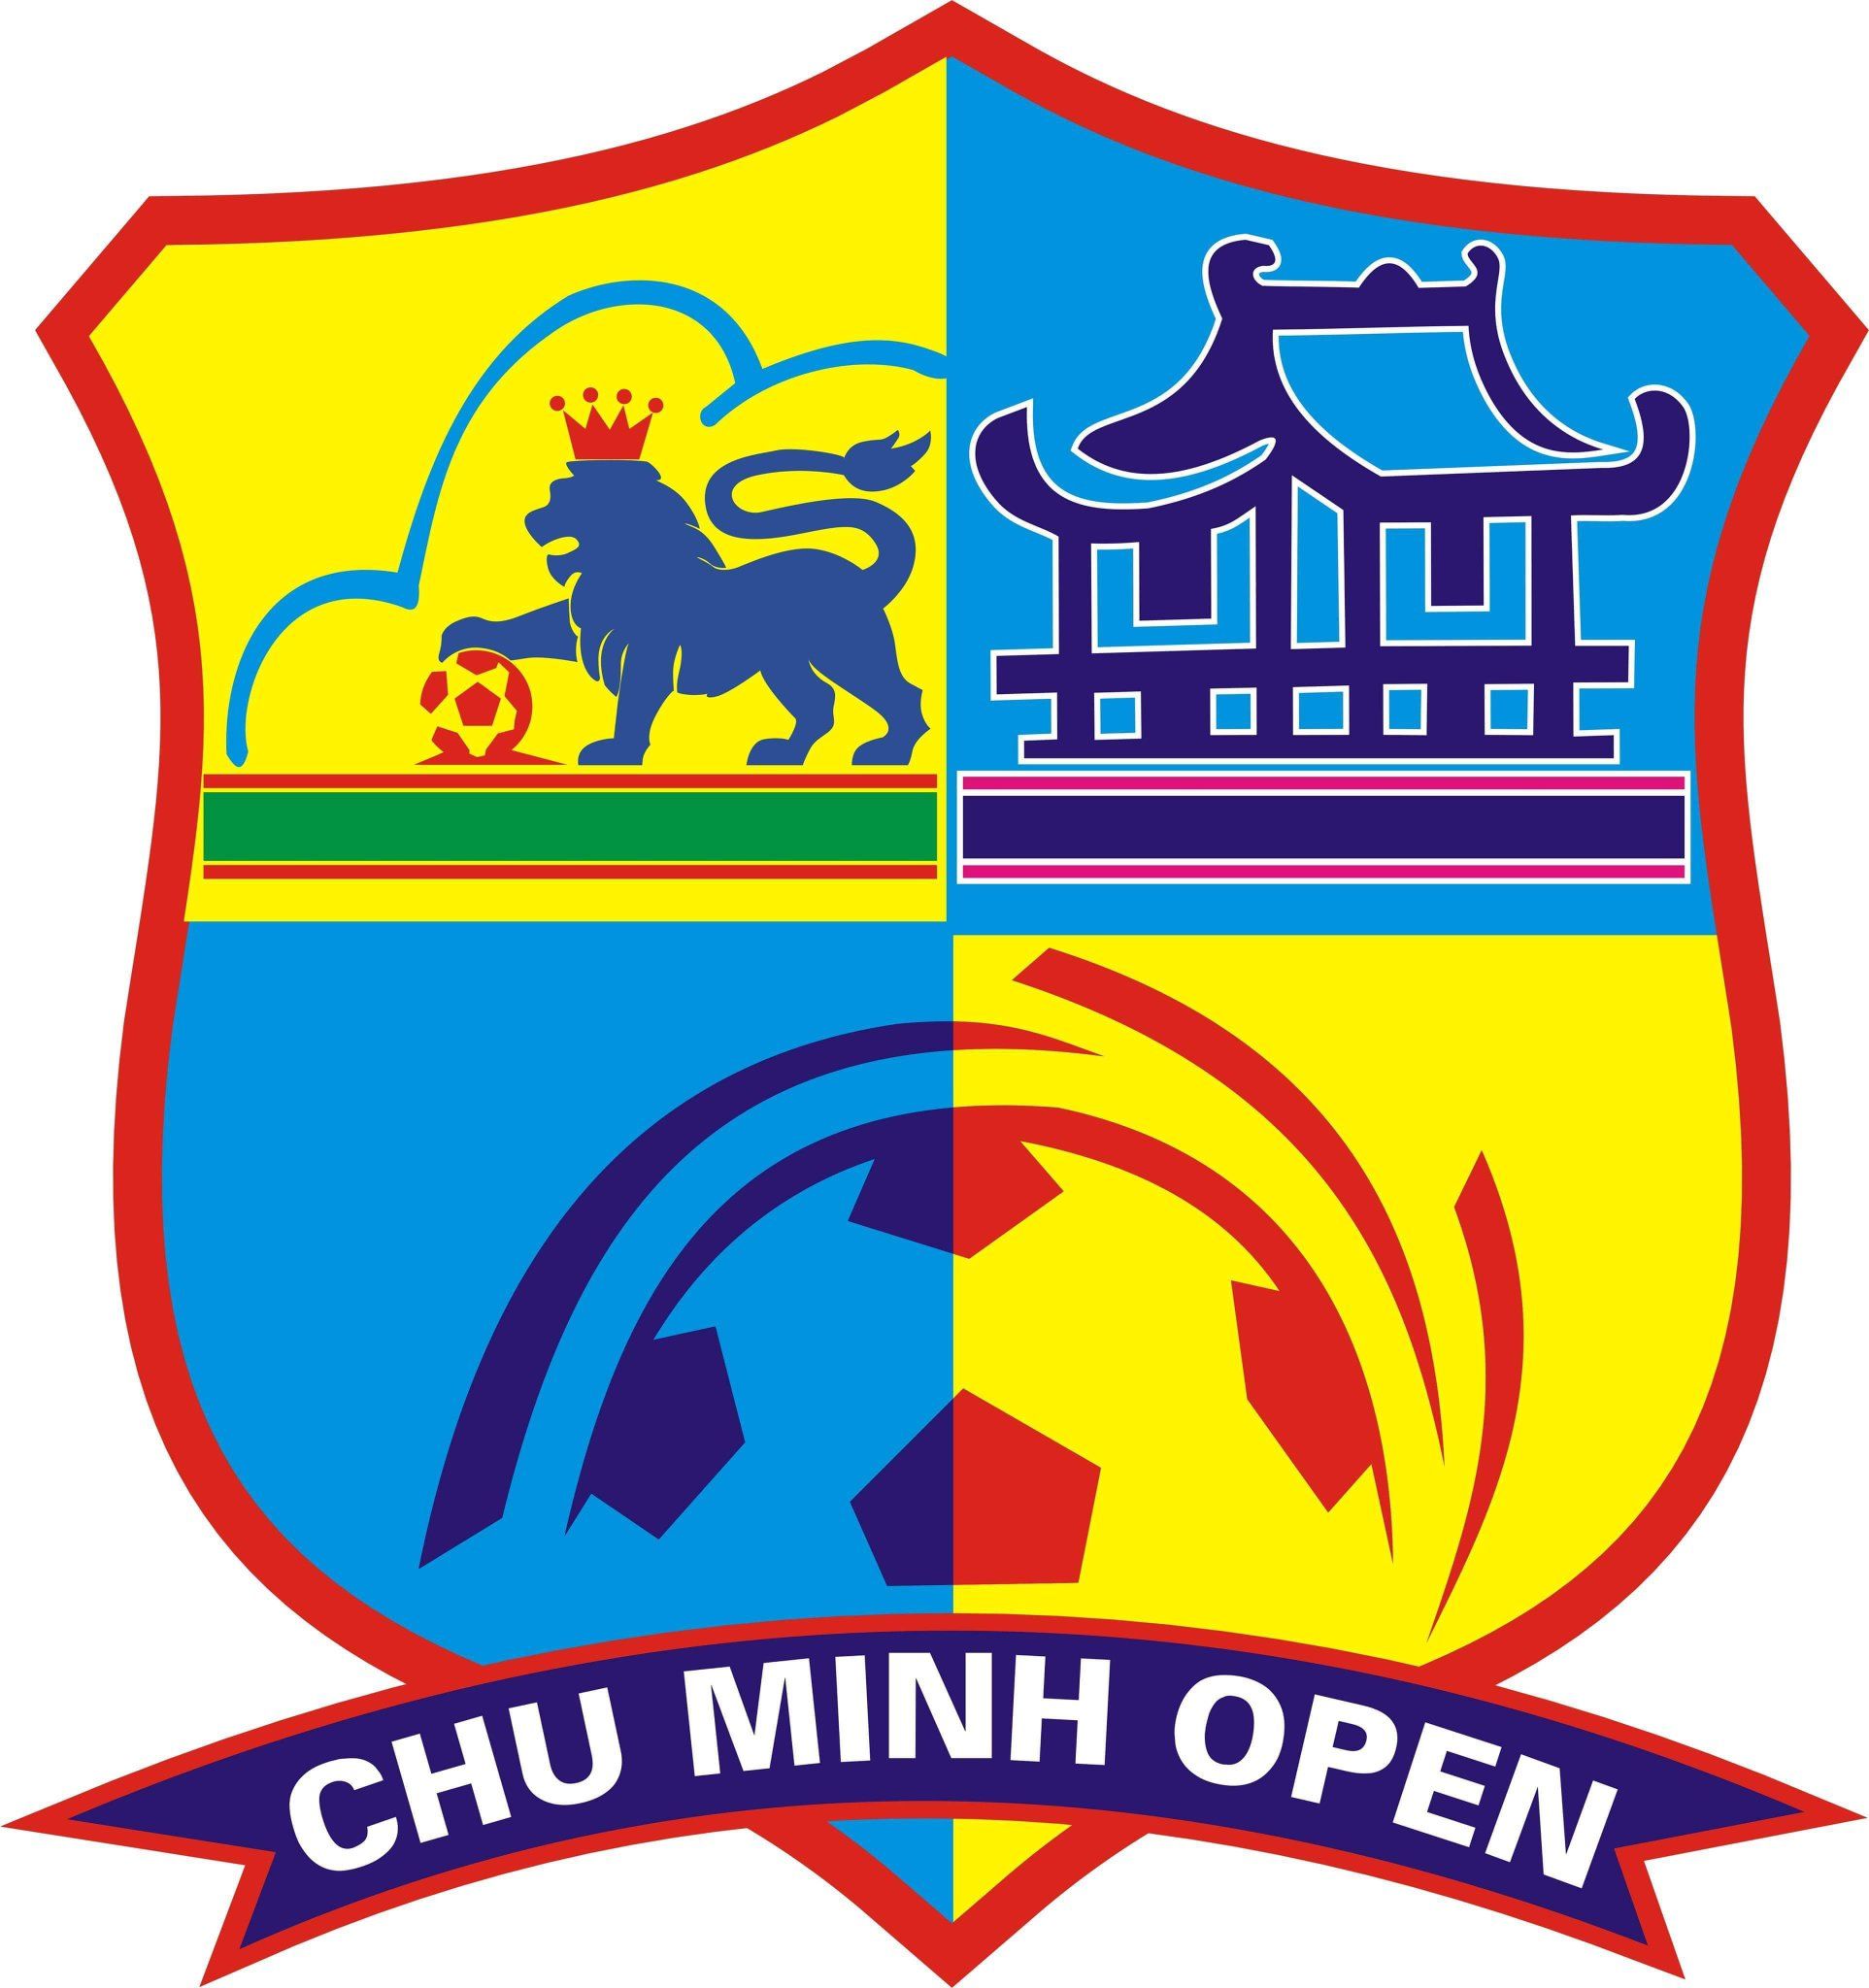 FC Chu Minh Open